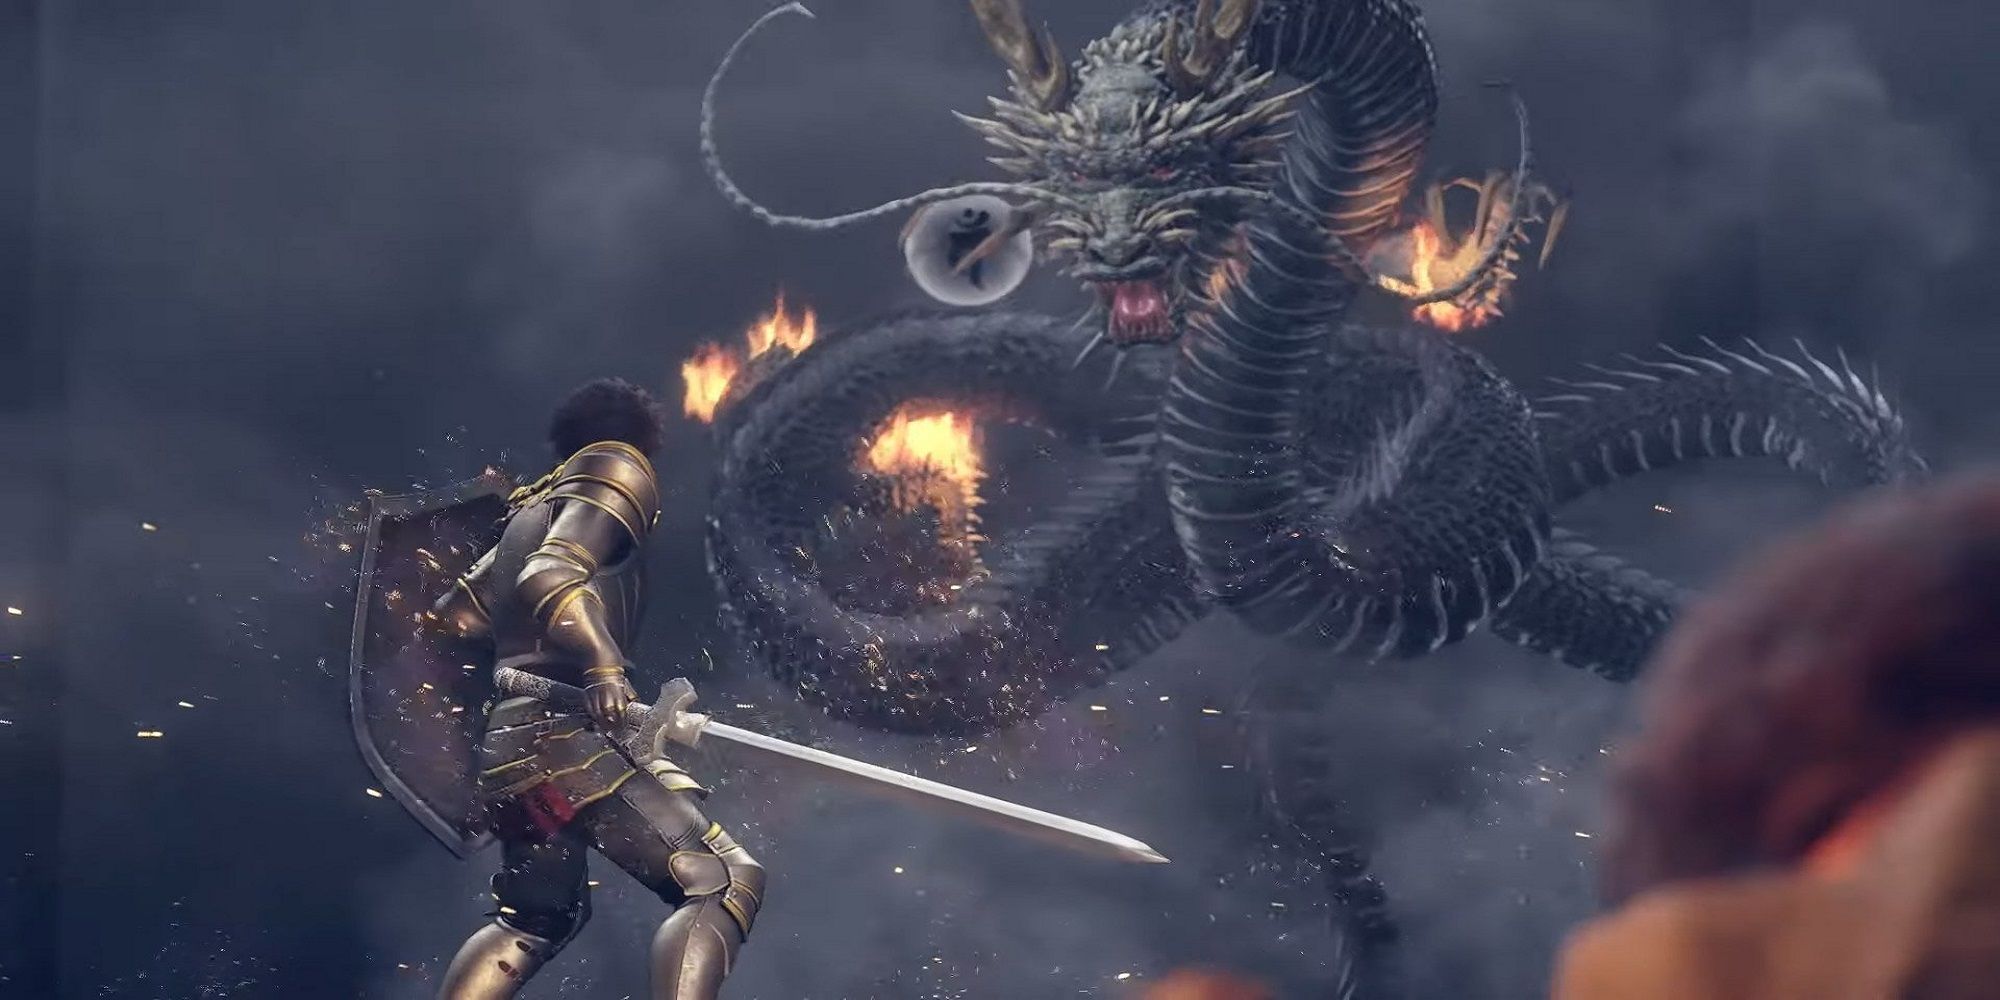 ichiban in armor standing up to dragon kiryu